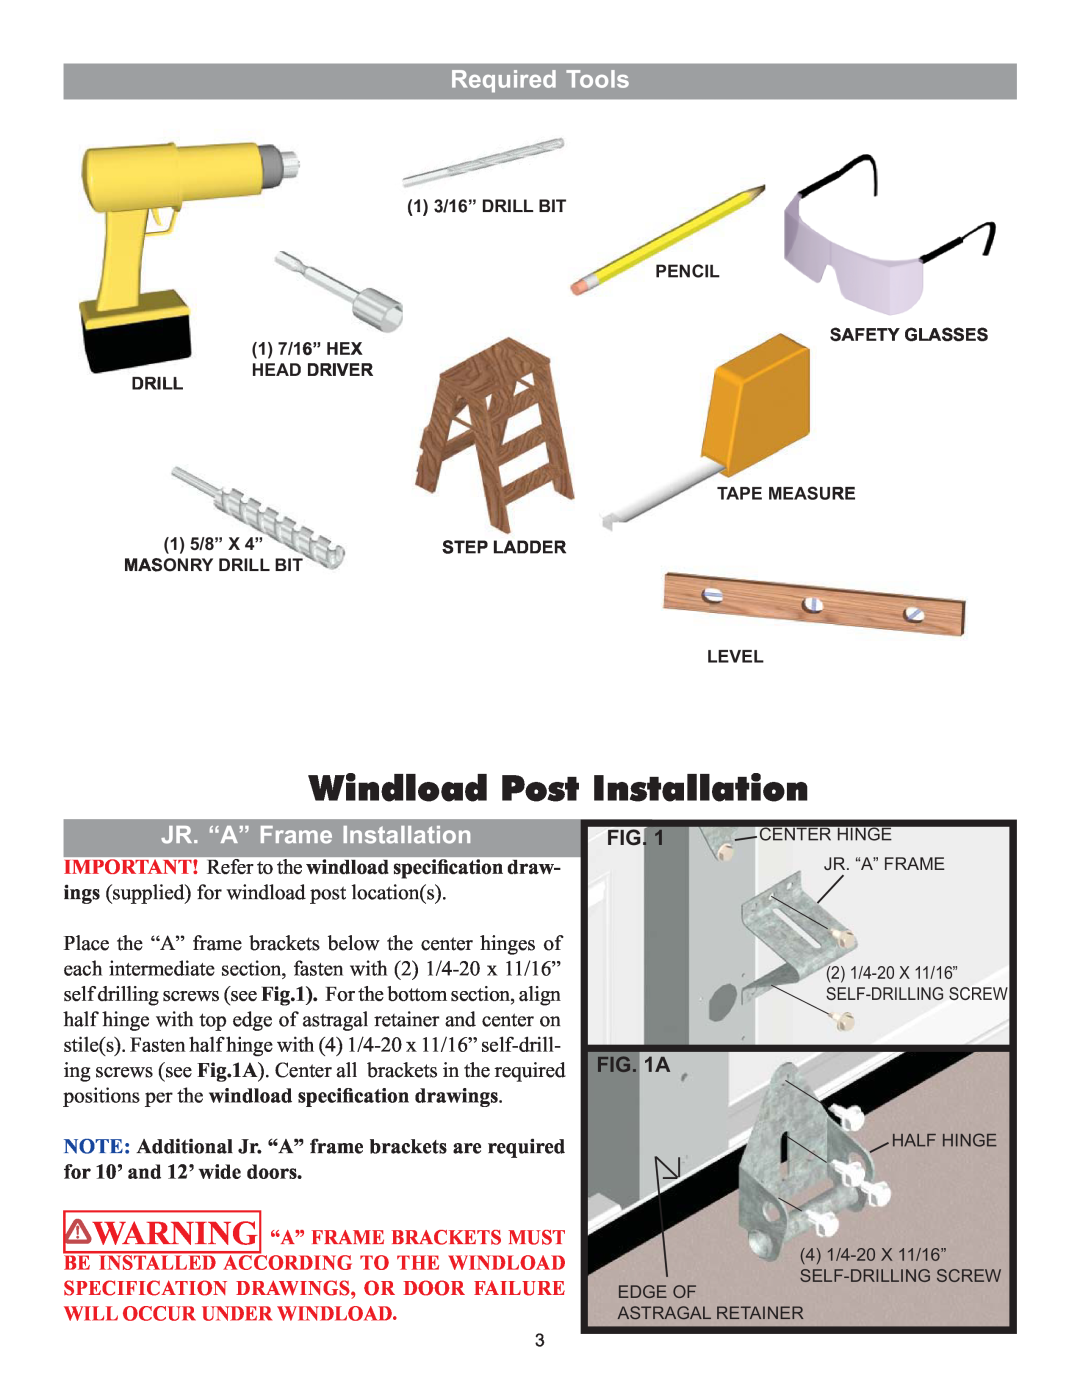 Wayne-Dalton 8000 installation instructions Required Tools, JR. “A” Frame Installation, Windload Post Installation 